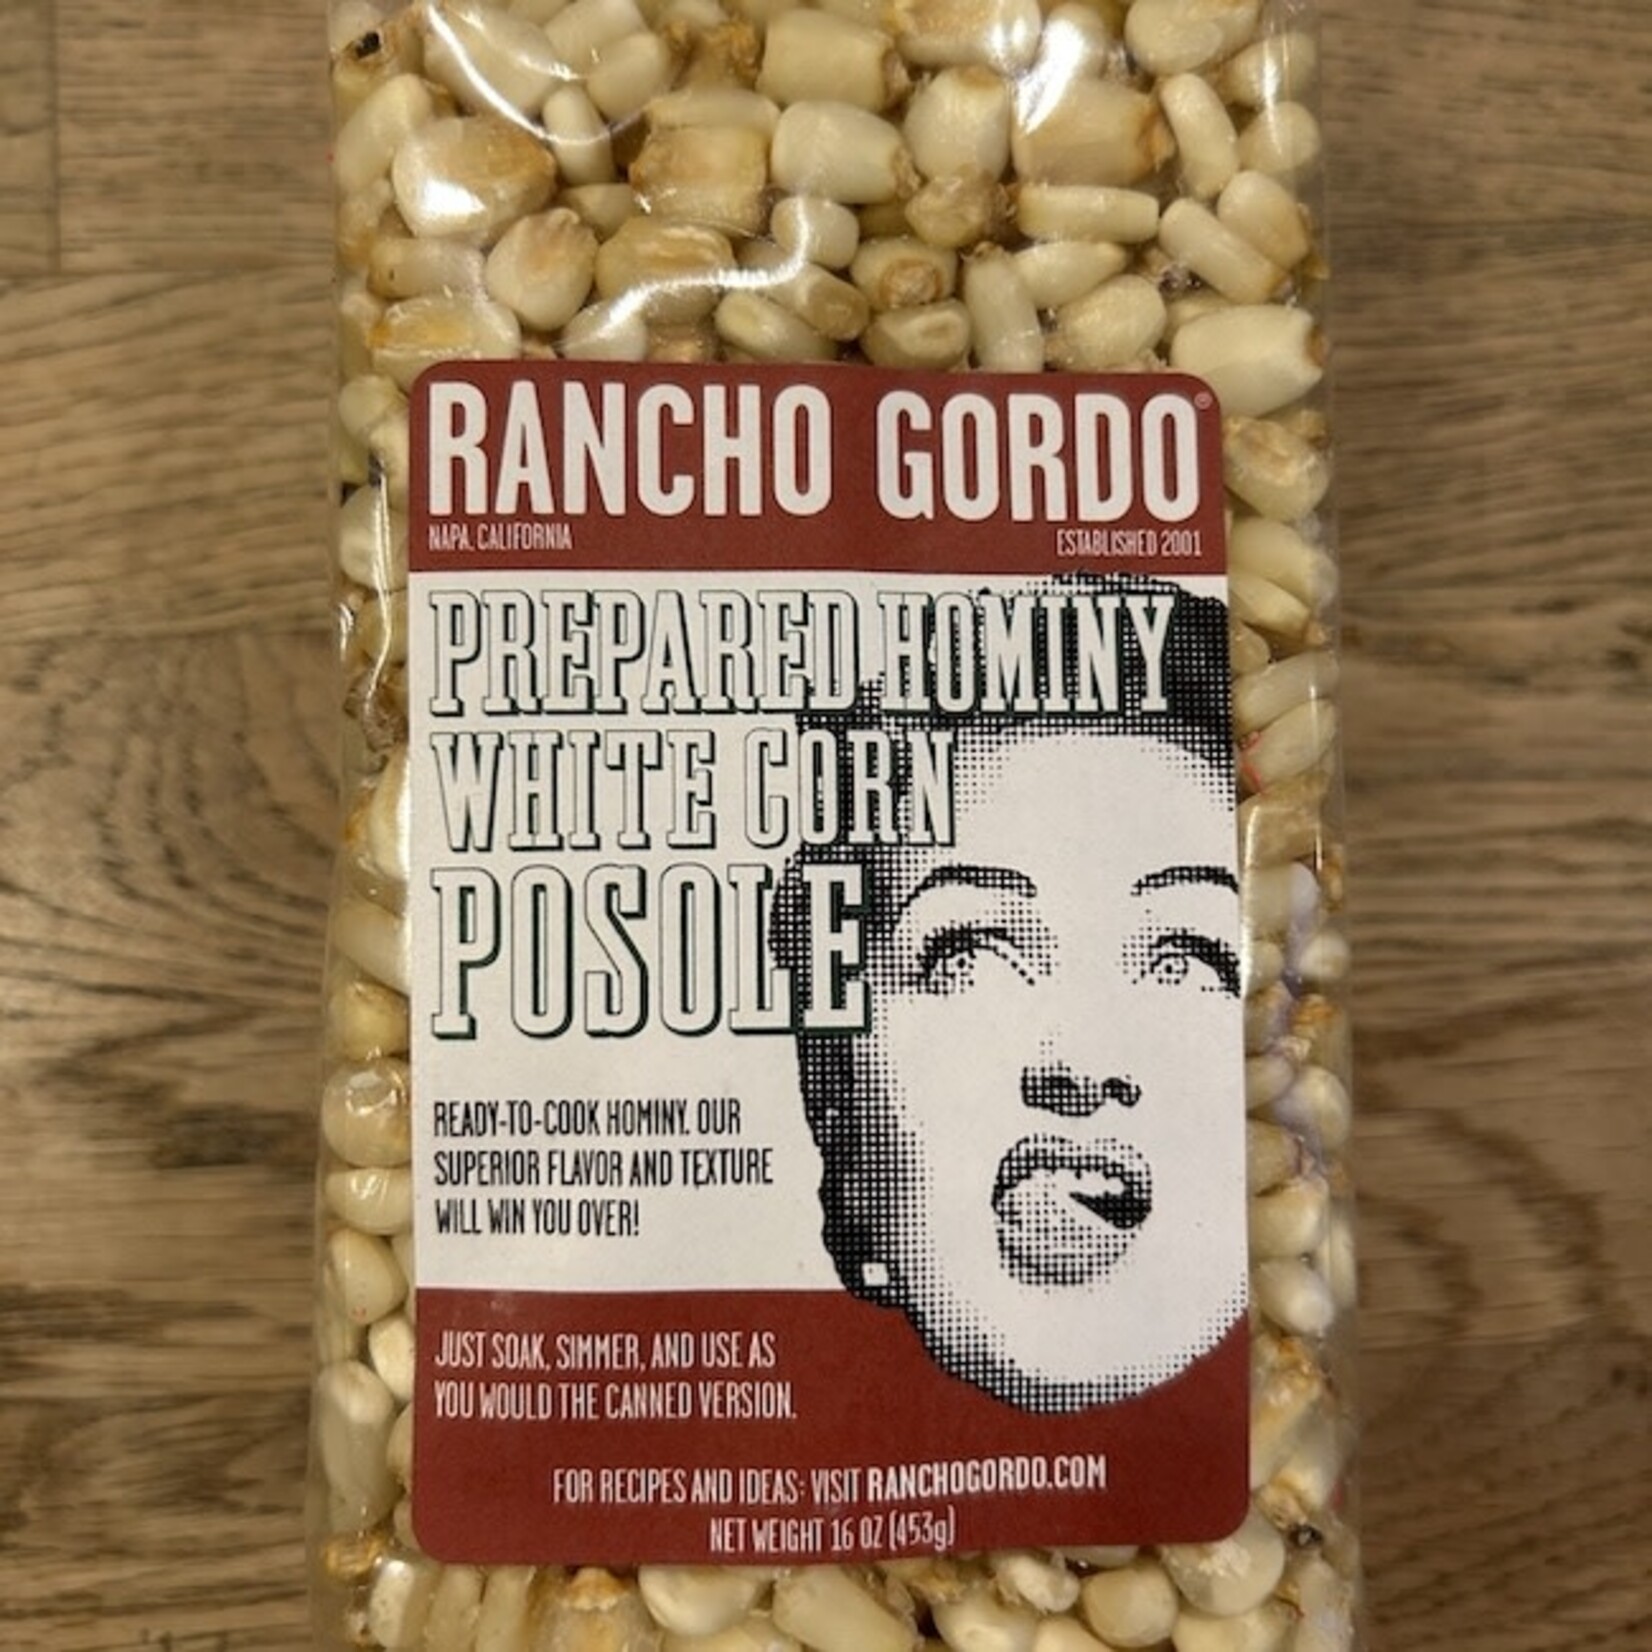 USA Rancho Gordo White Corn Posole/Prepared Hominy